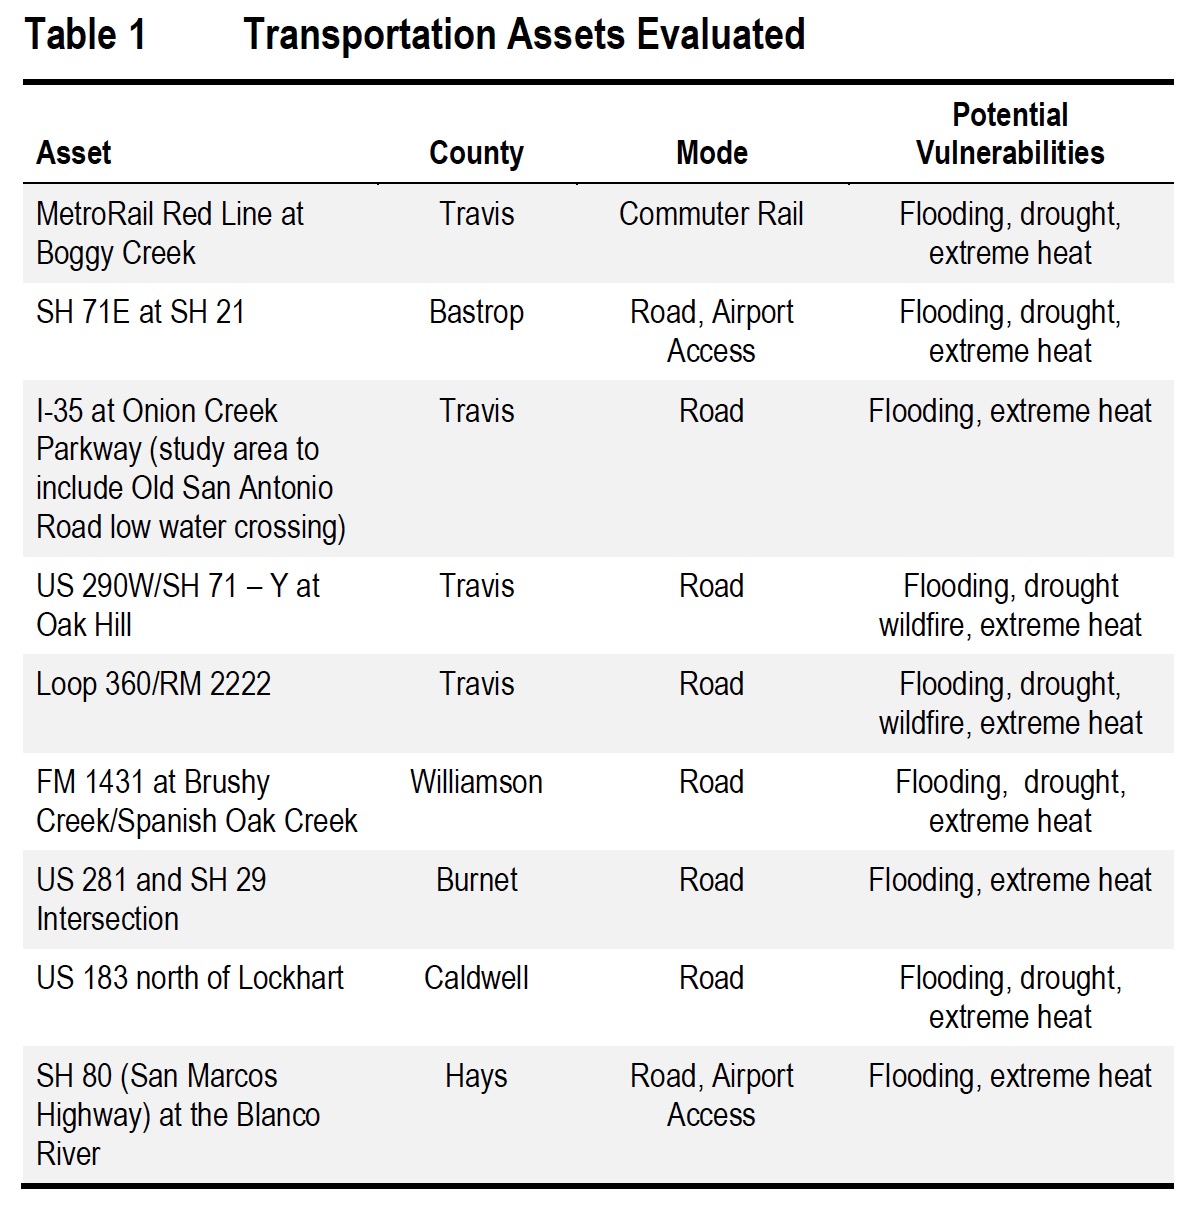 Table 1: Transportation Assets Evaluated